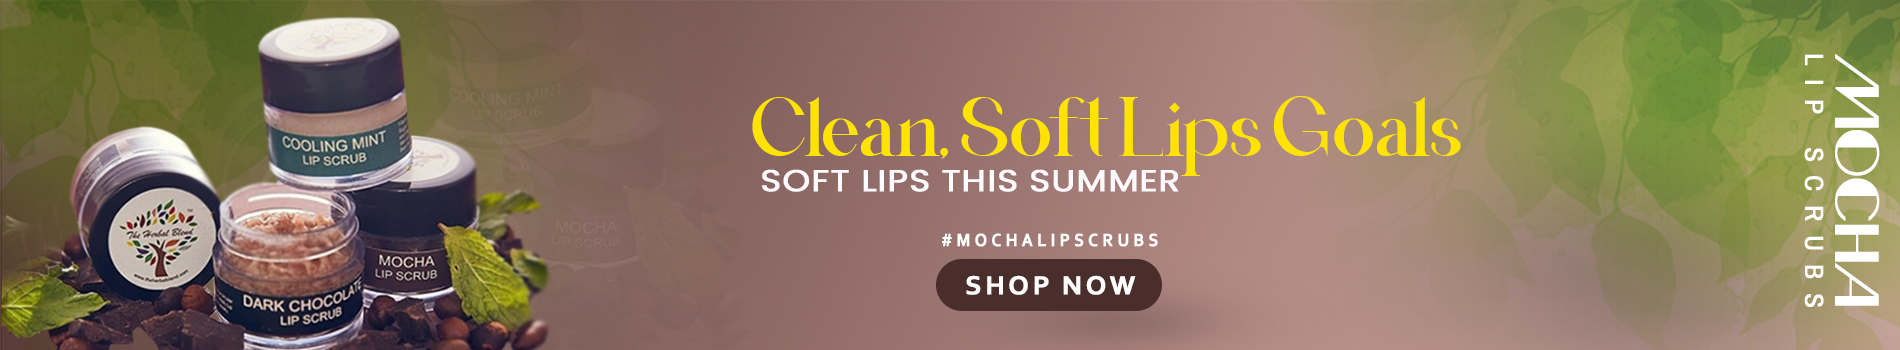 Clean Soft Lips Goals